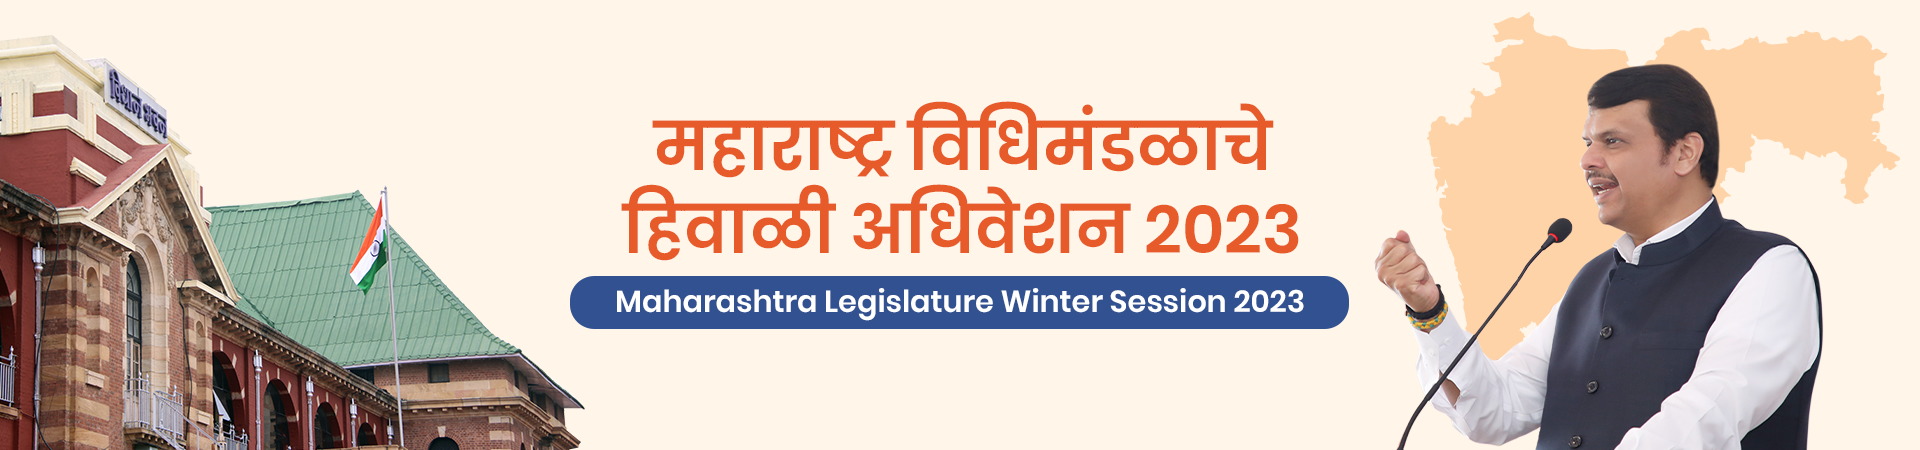 Devendra Fadnavis on Winter session Maharashtra 2023 Maharashtra vidhan sabha